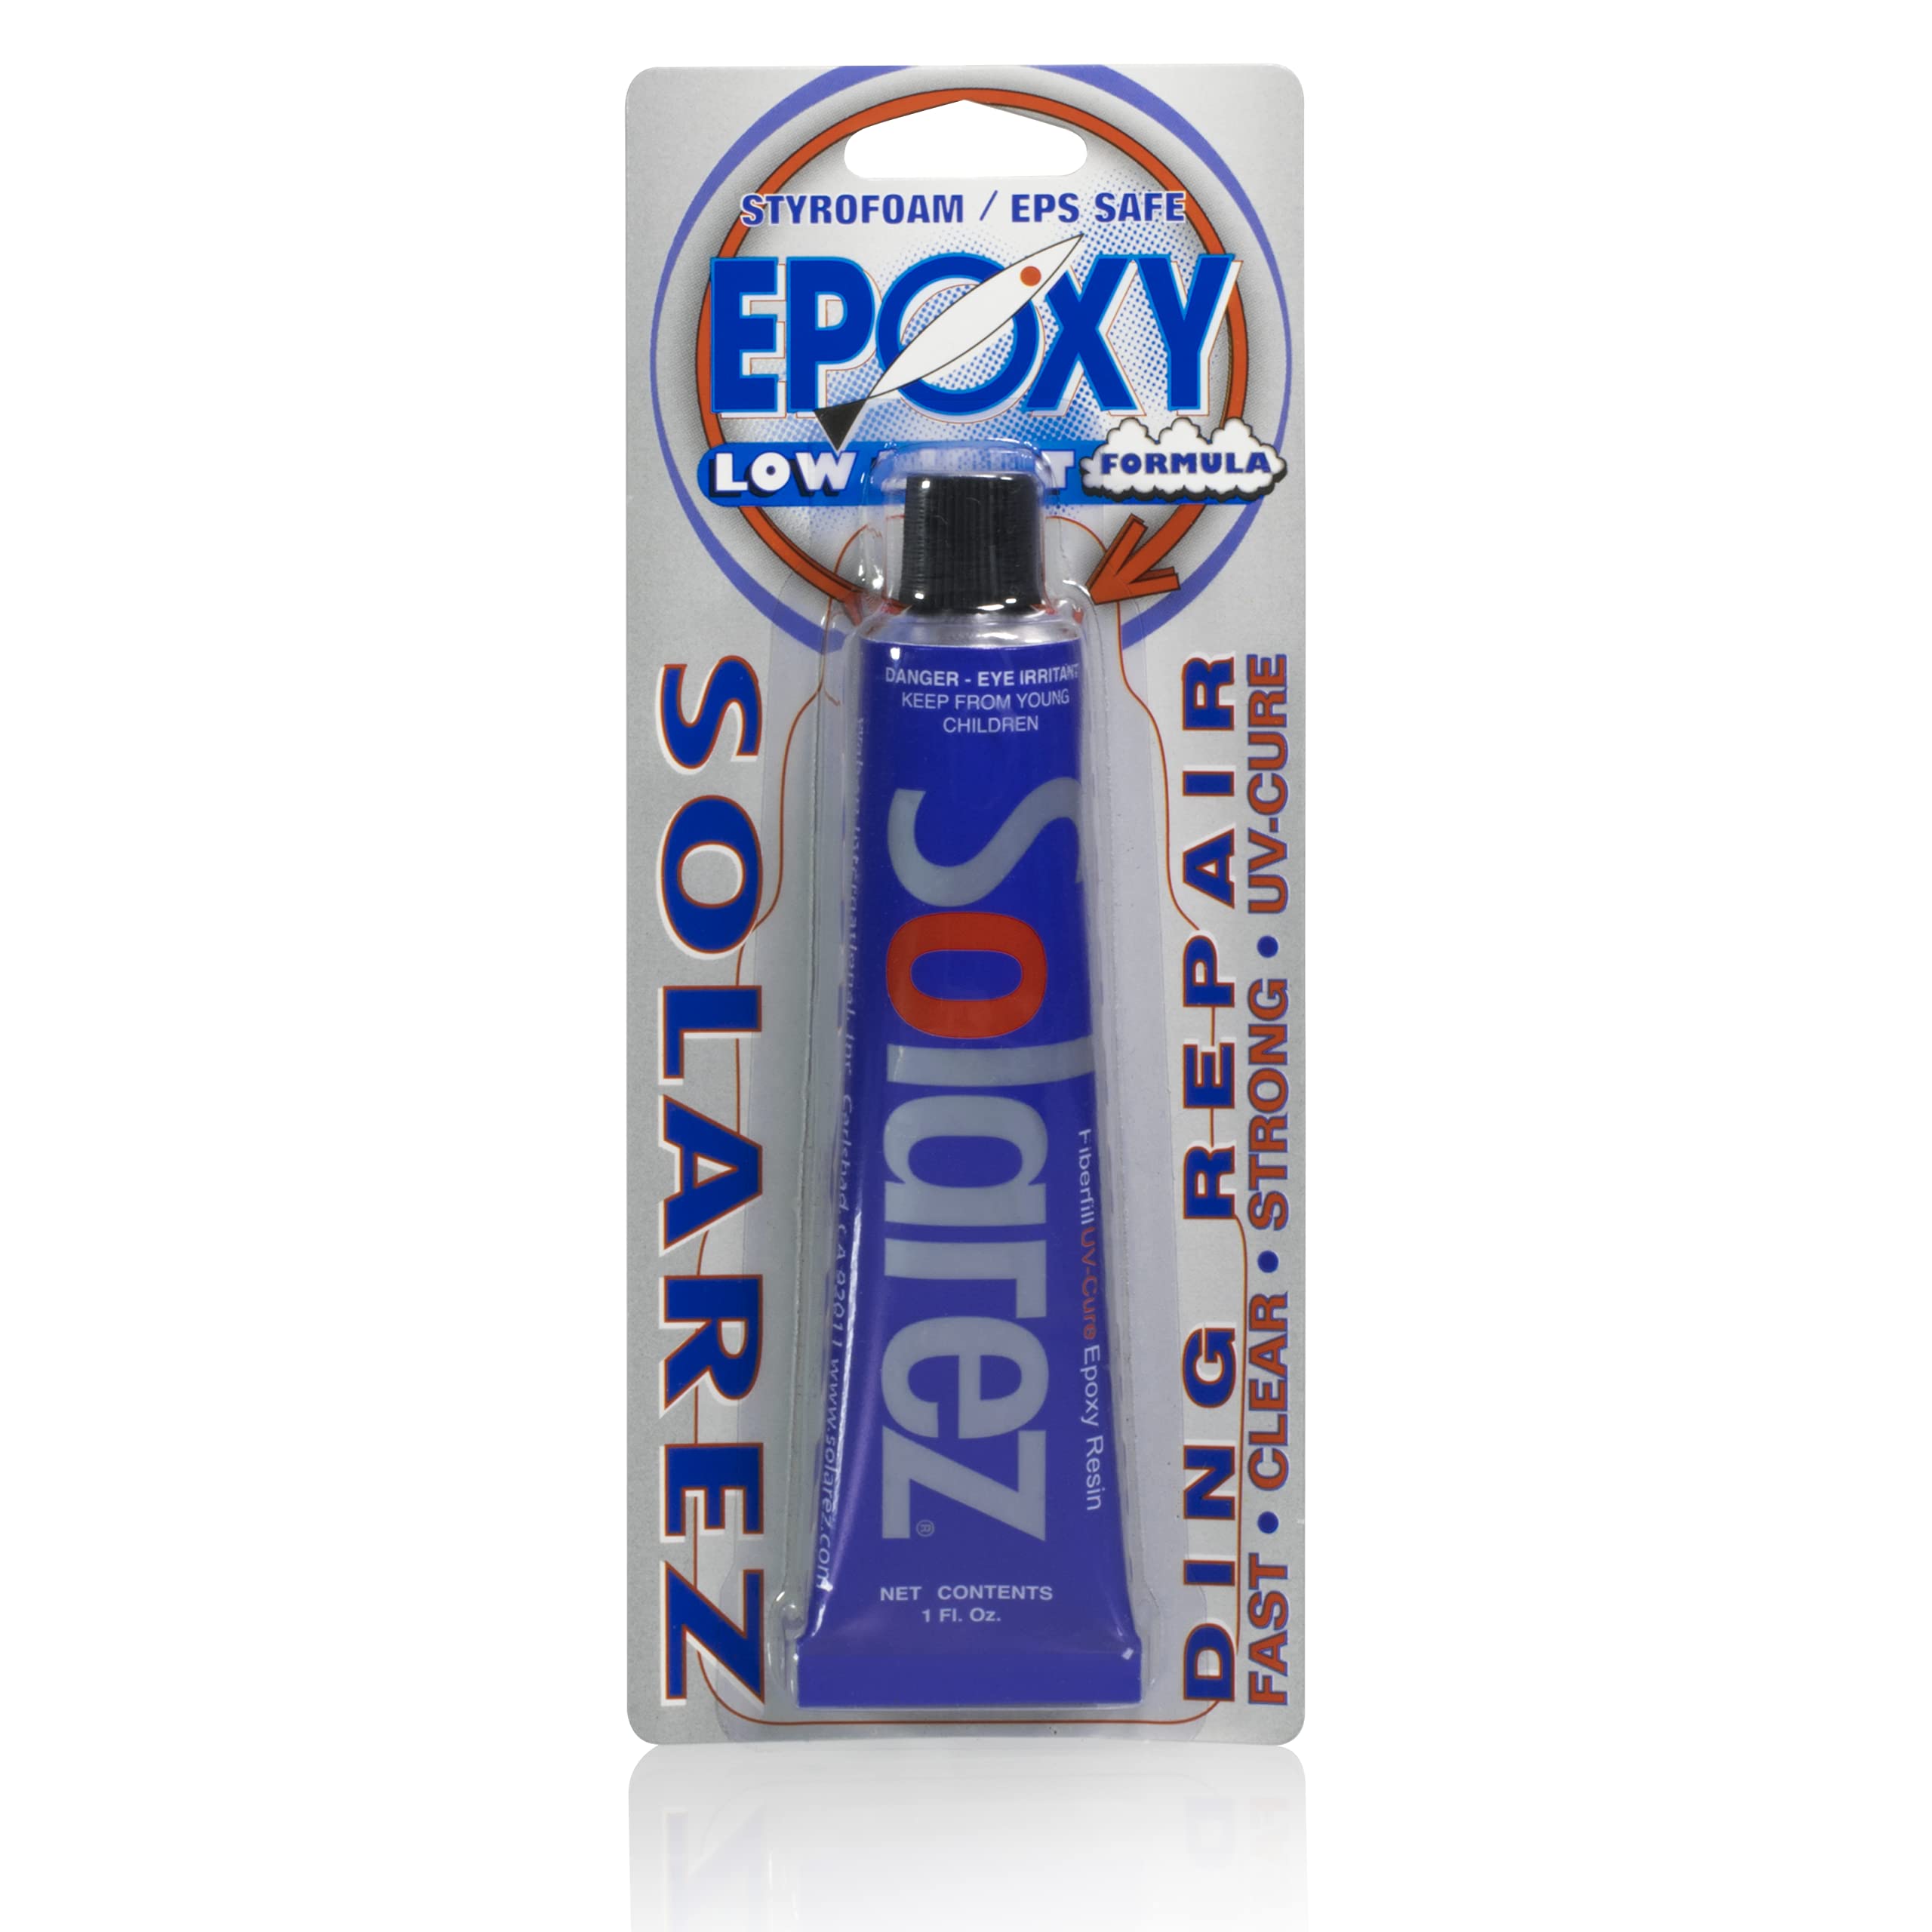 SOLAREZ UV cure Epoxy Low Lite Ding Repair (1 oz) Low Light Surfboard Repair  Sun cures 100% Dry in cloudy Weather  EPS Foam Saf